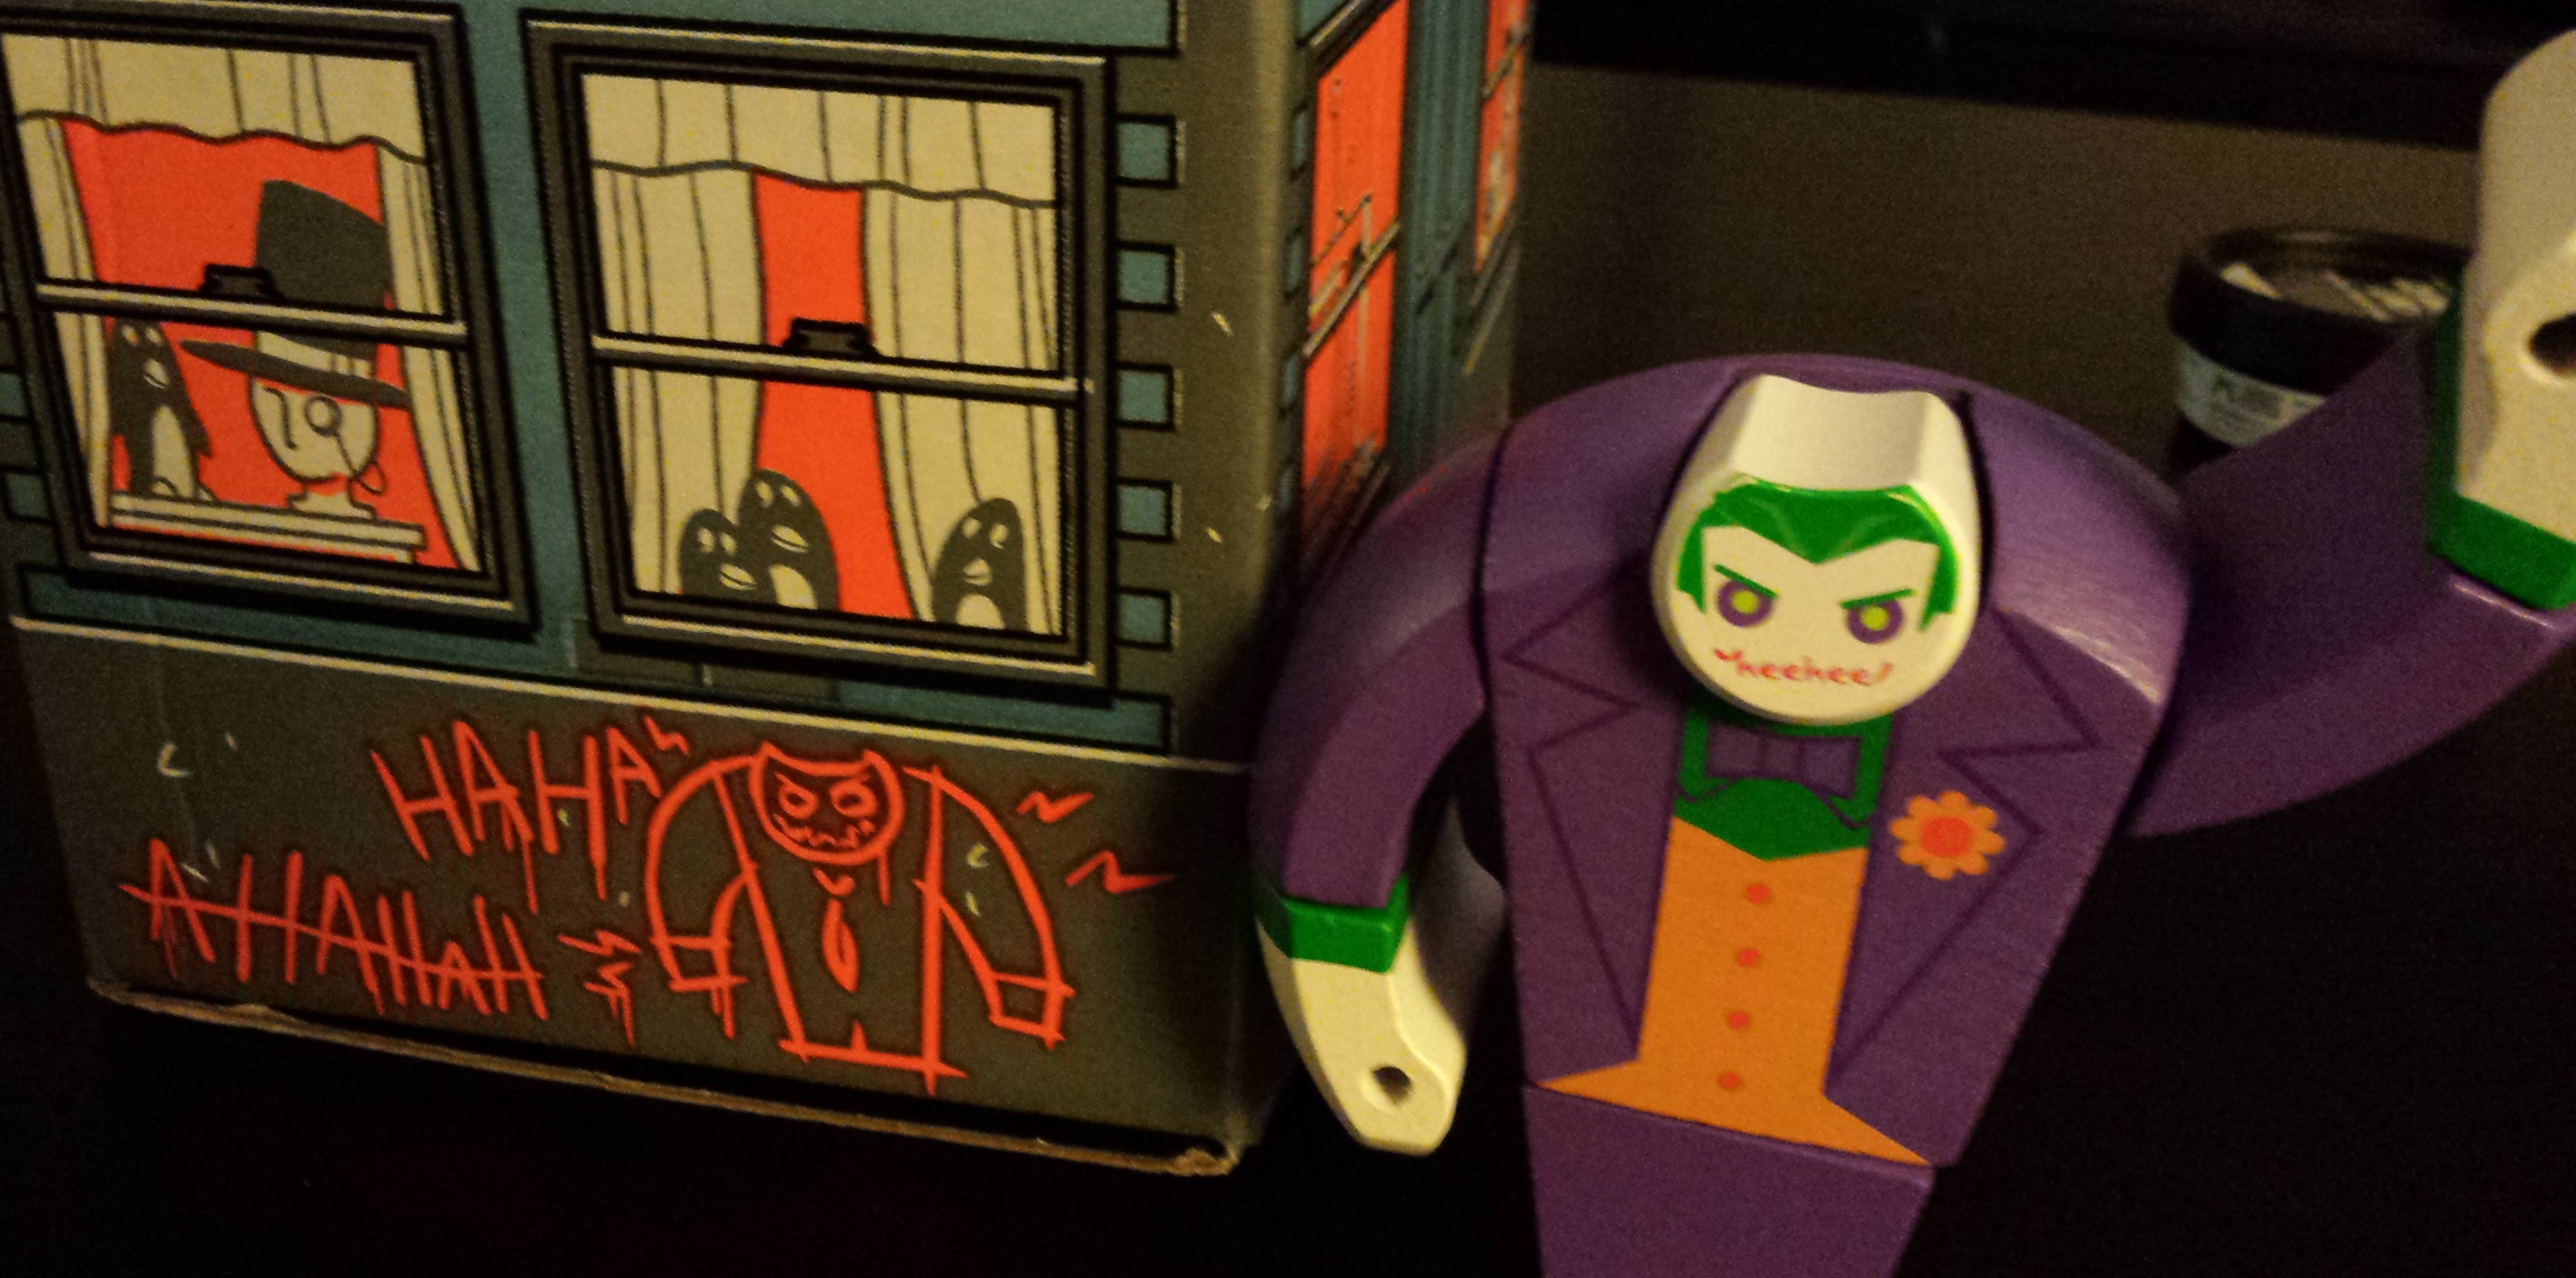 August's loot crate, joker toy